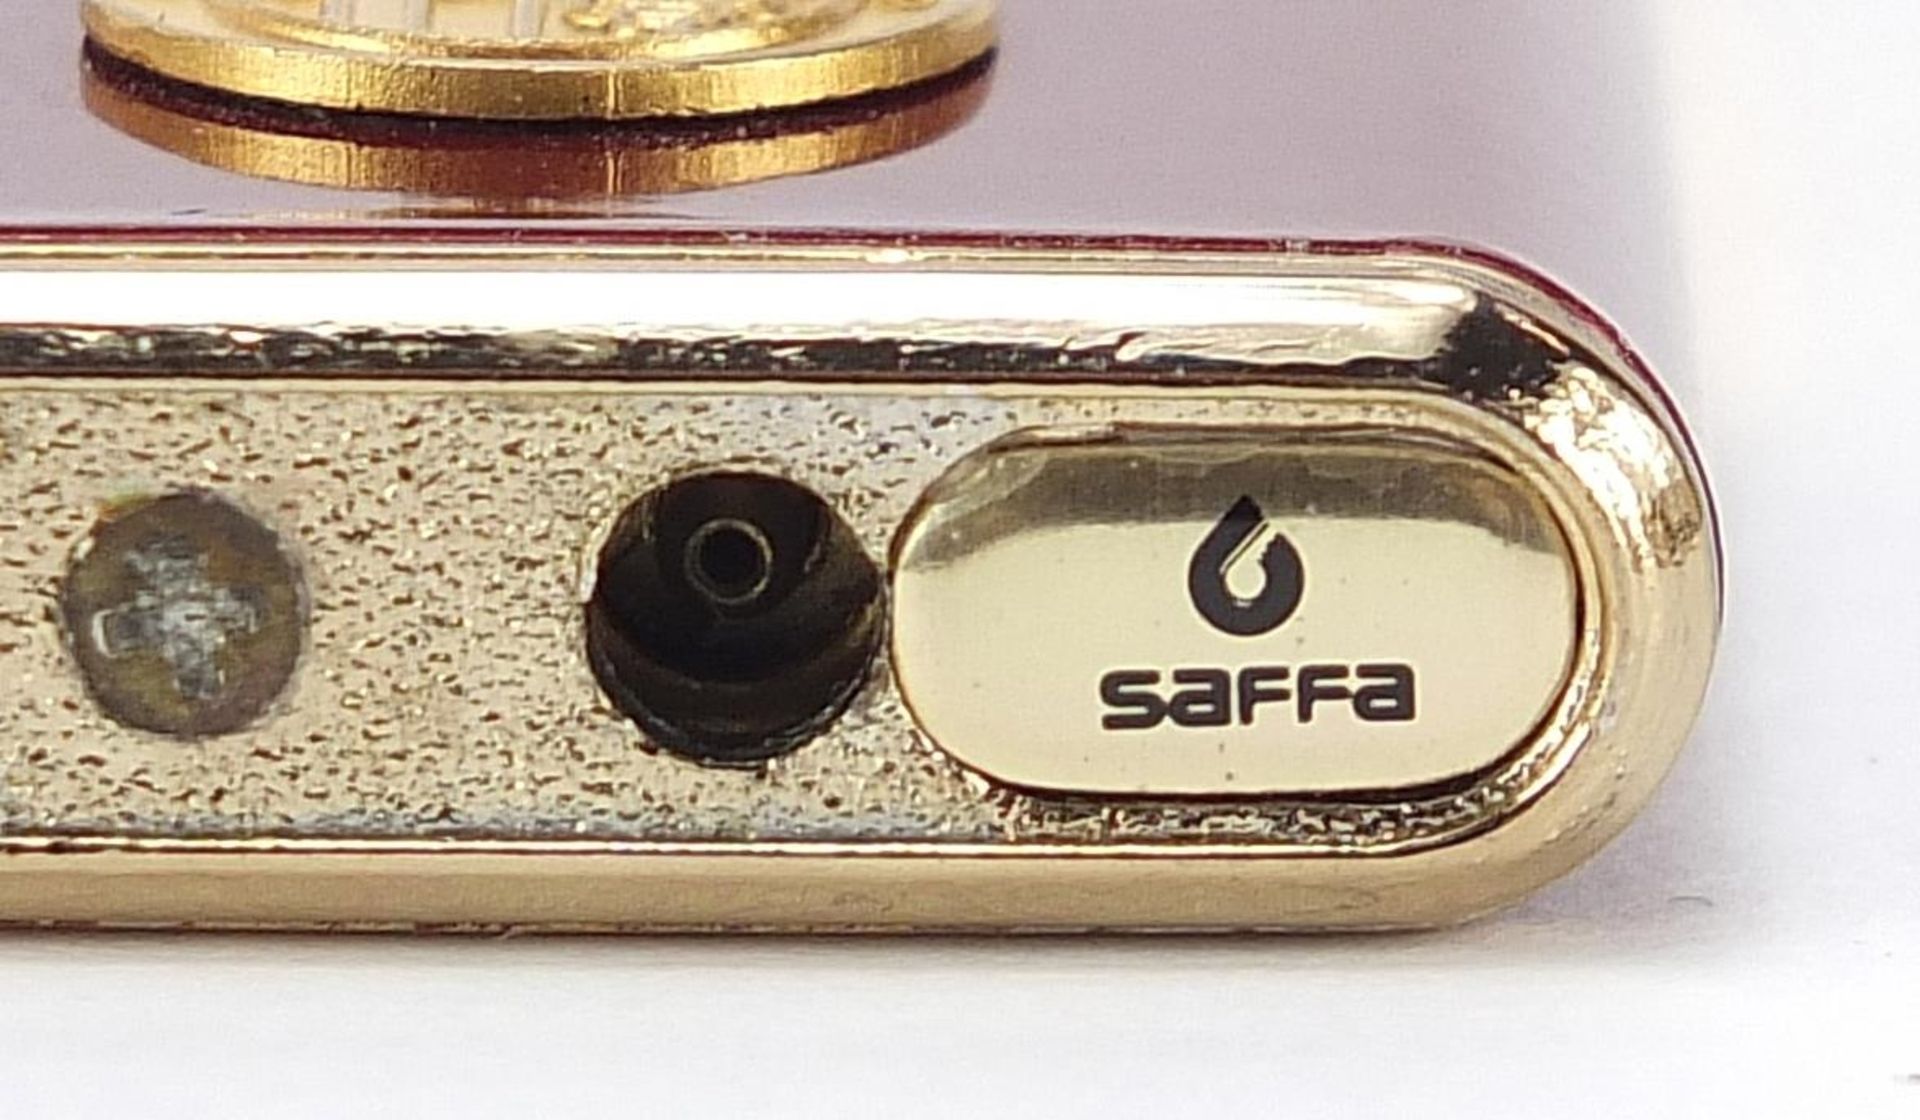 Saffa Alpha Romeo design pocket lighter, 7cm high - Image 4 of 4